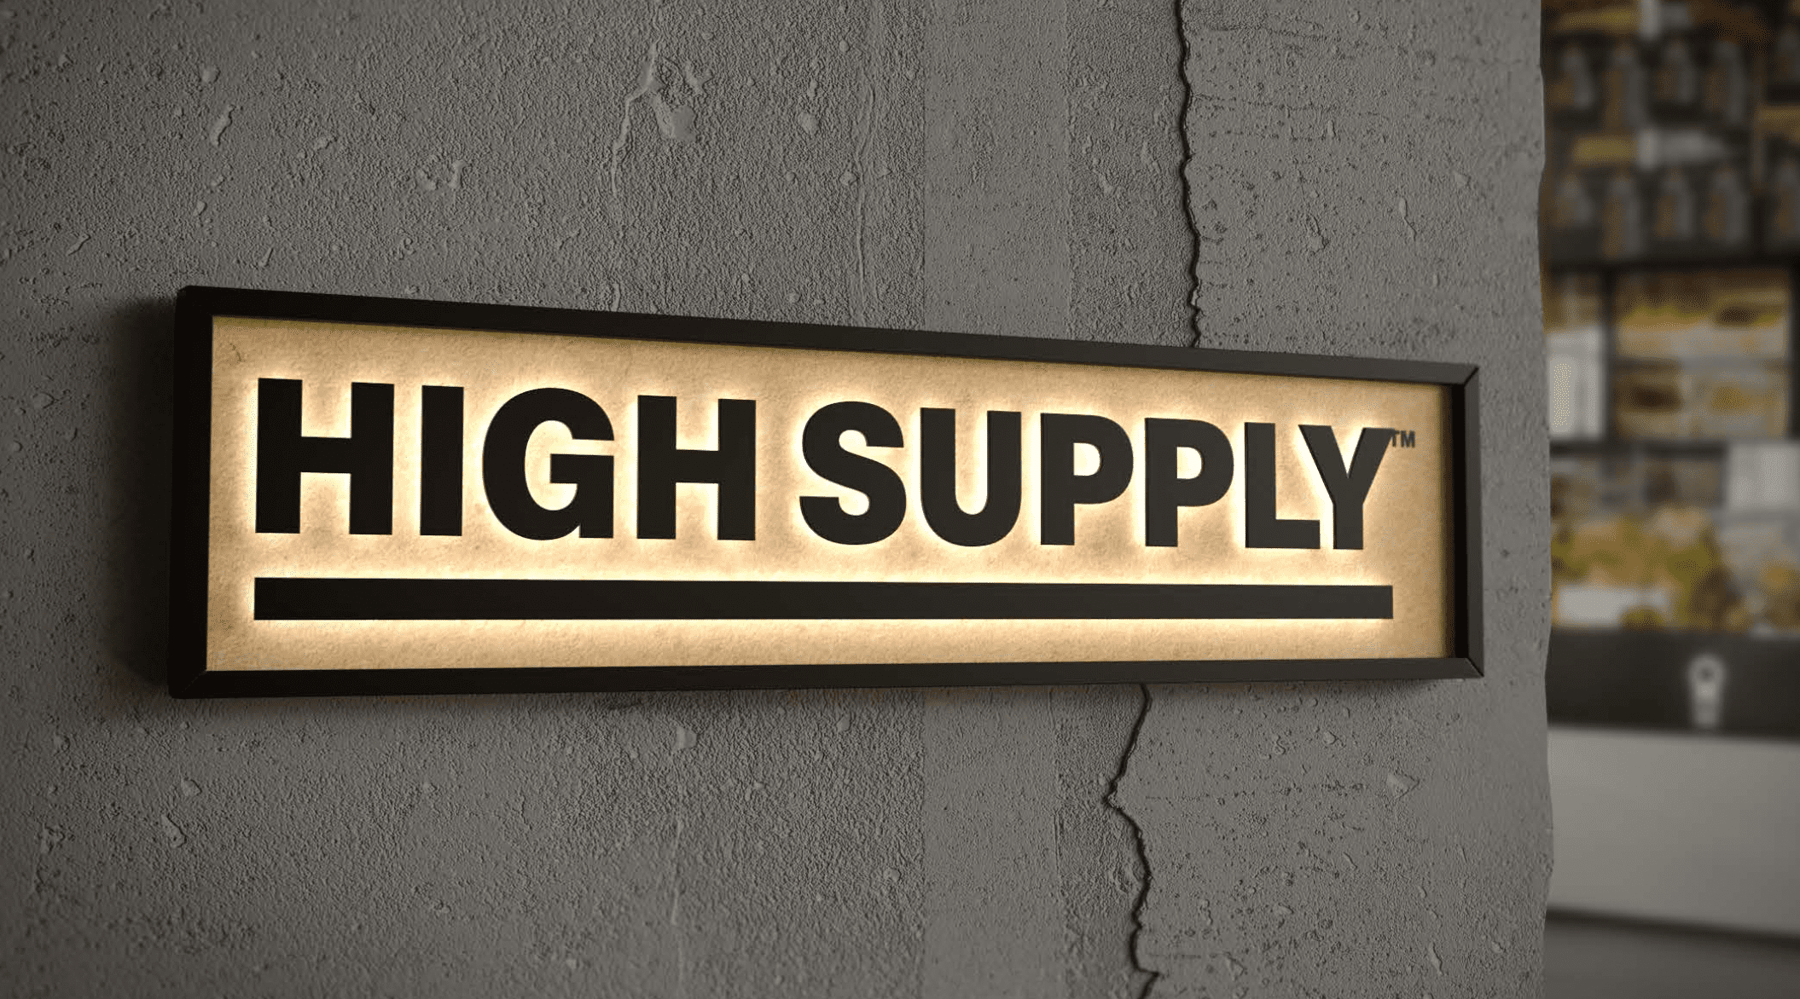 HighSupply_LED sign_Wall